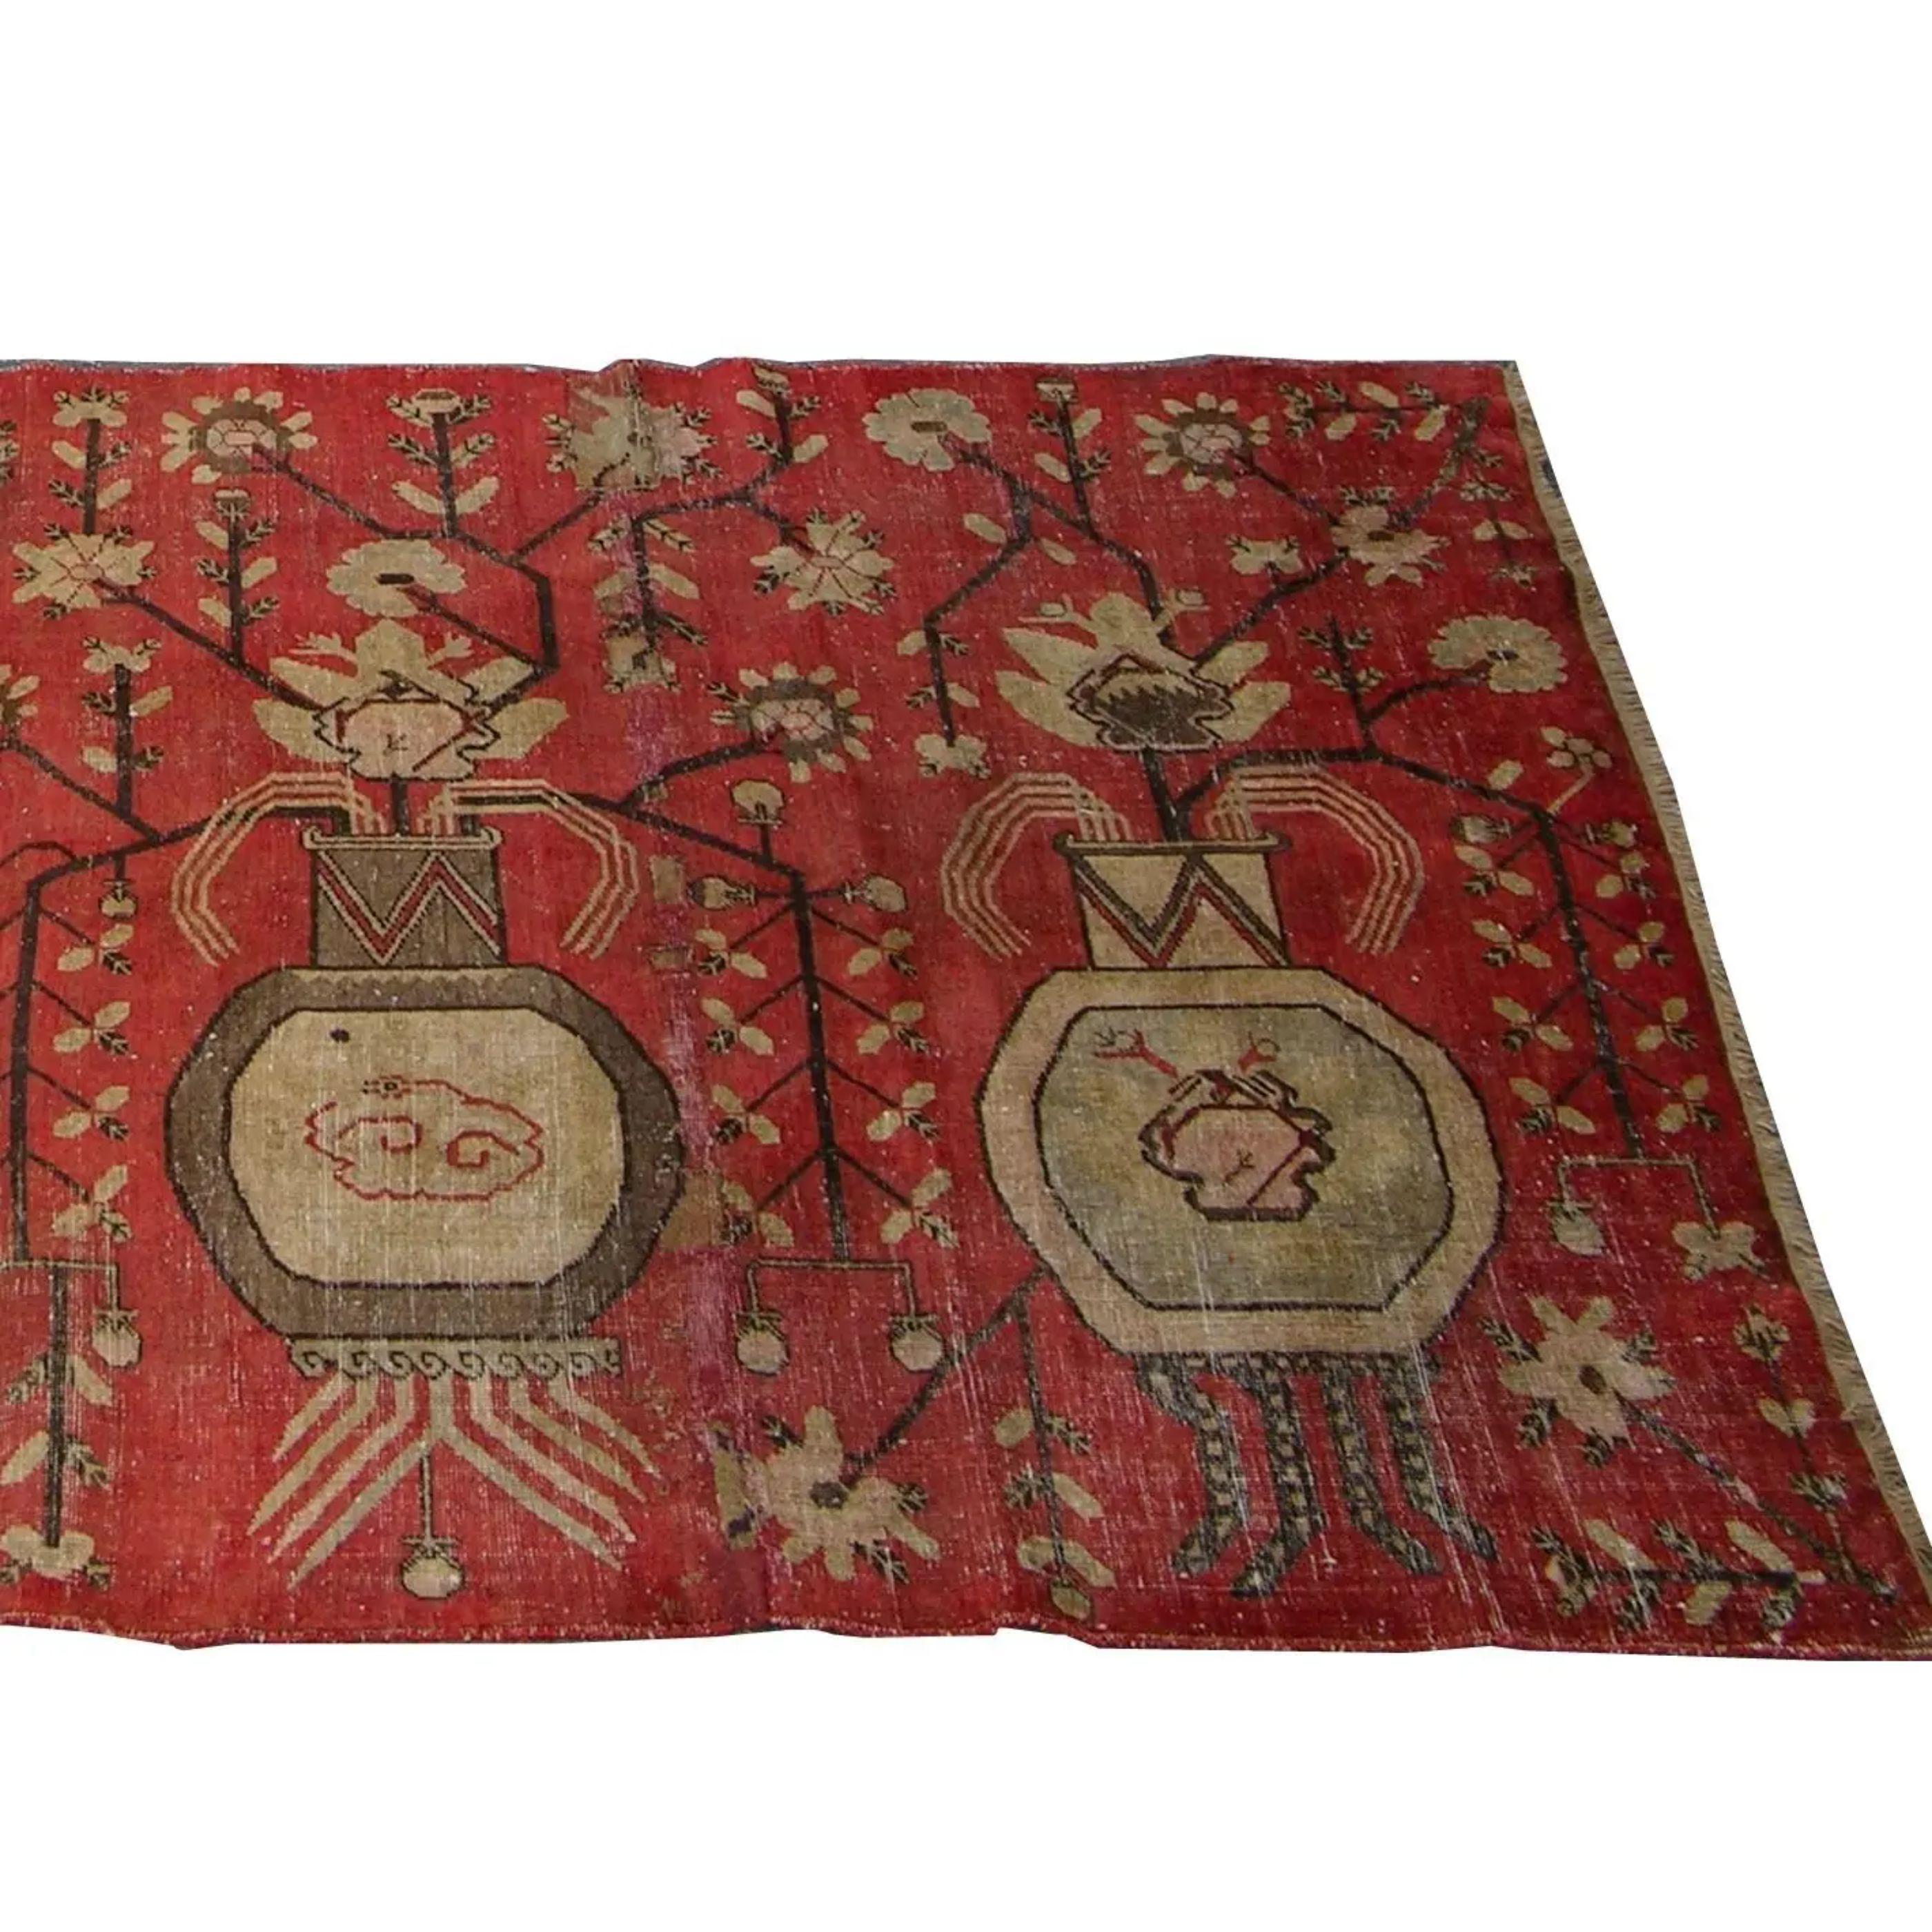 Up for sale is an antique Khotan Samarkand Rug, circa 1900s.